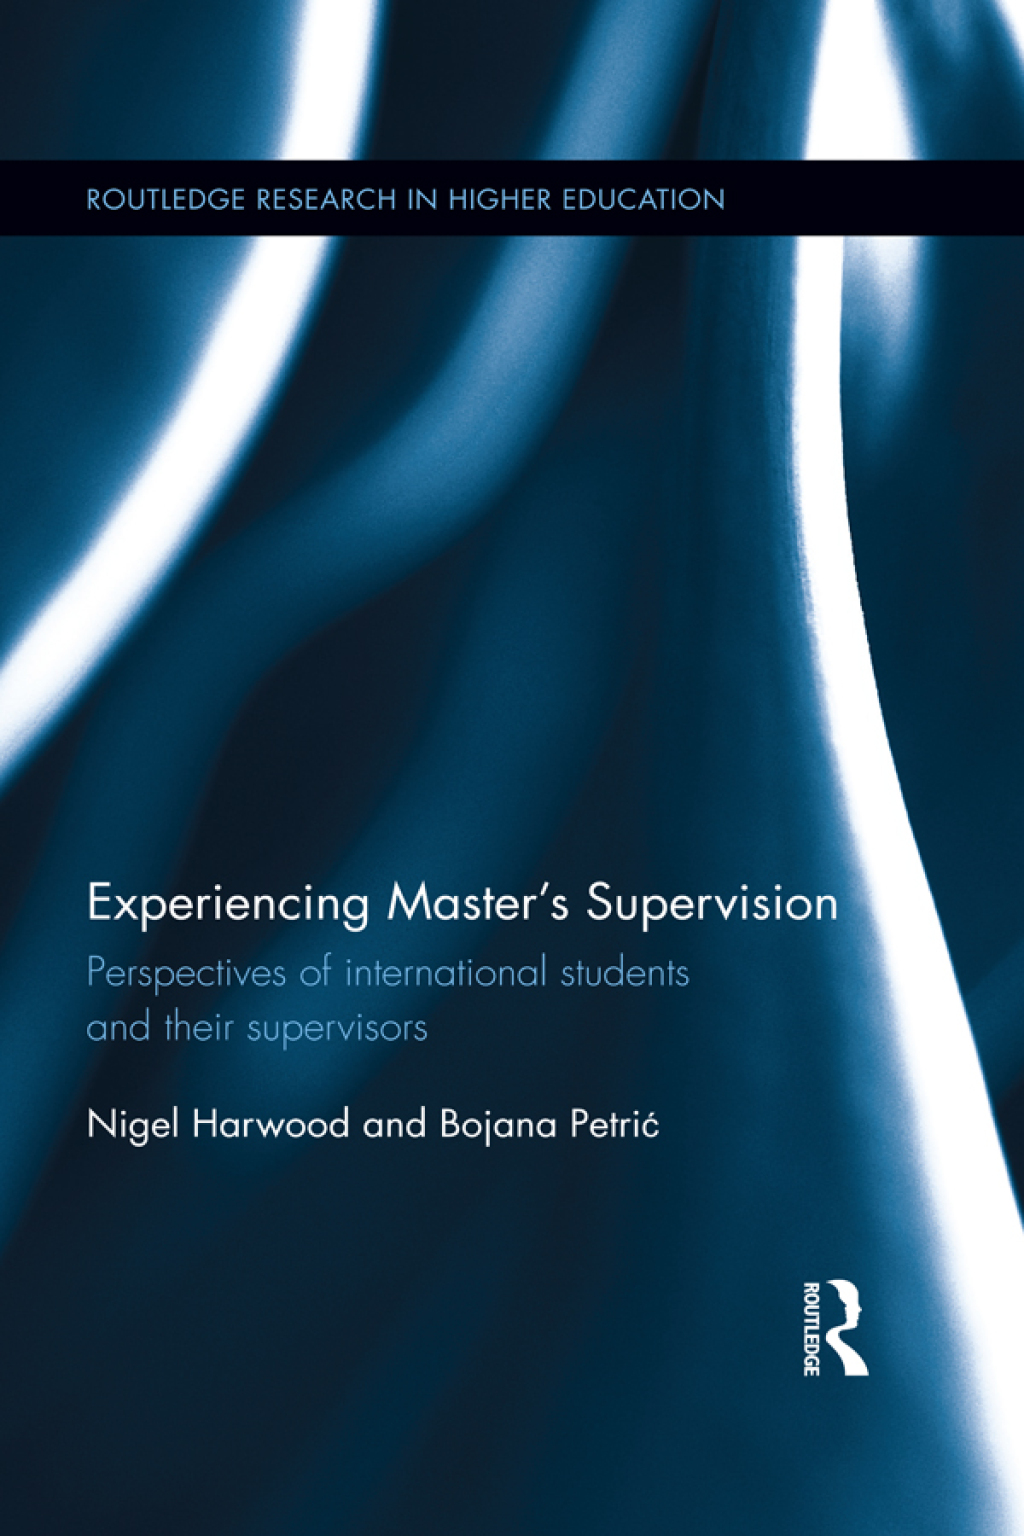 masters dissertation supervision